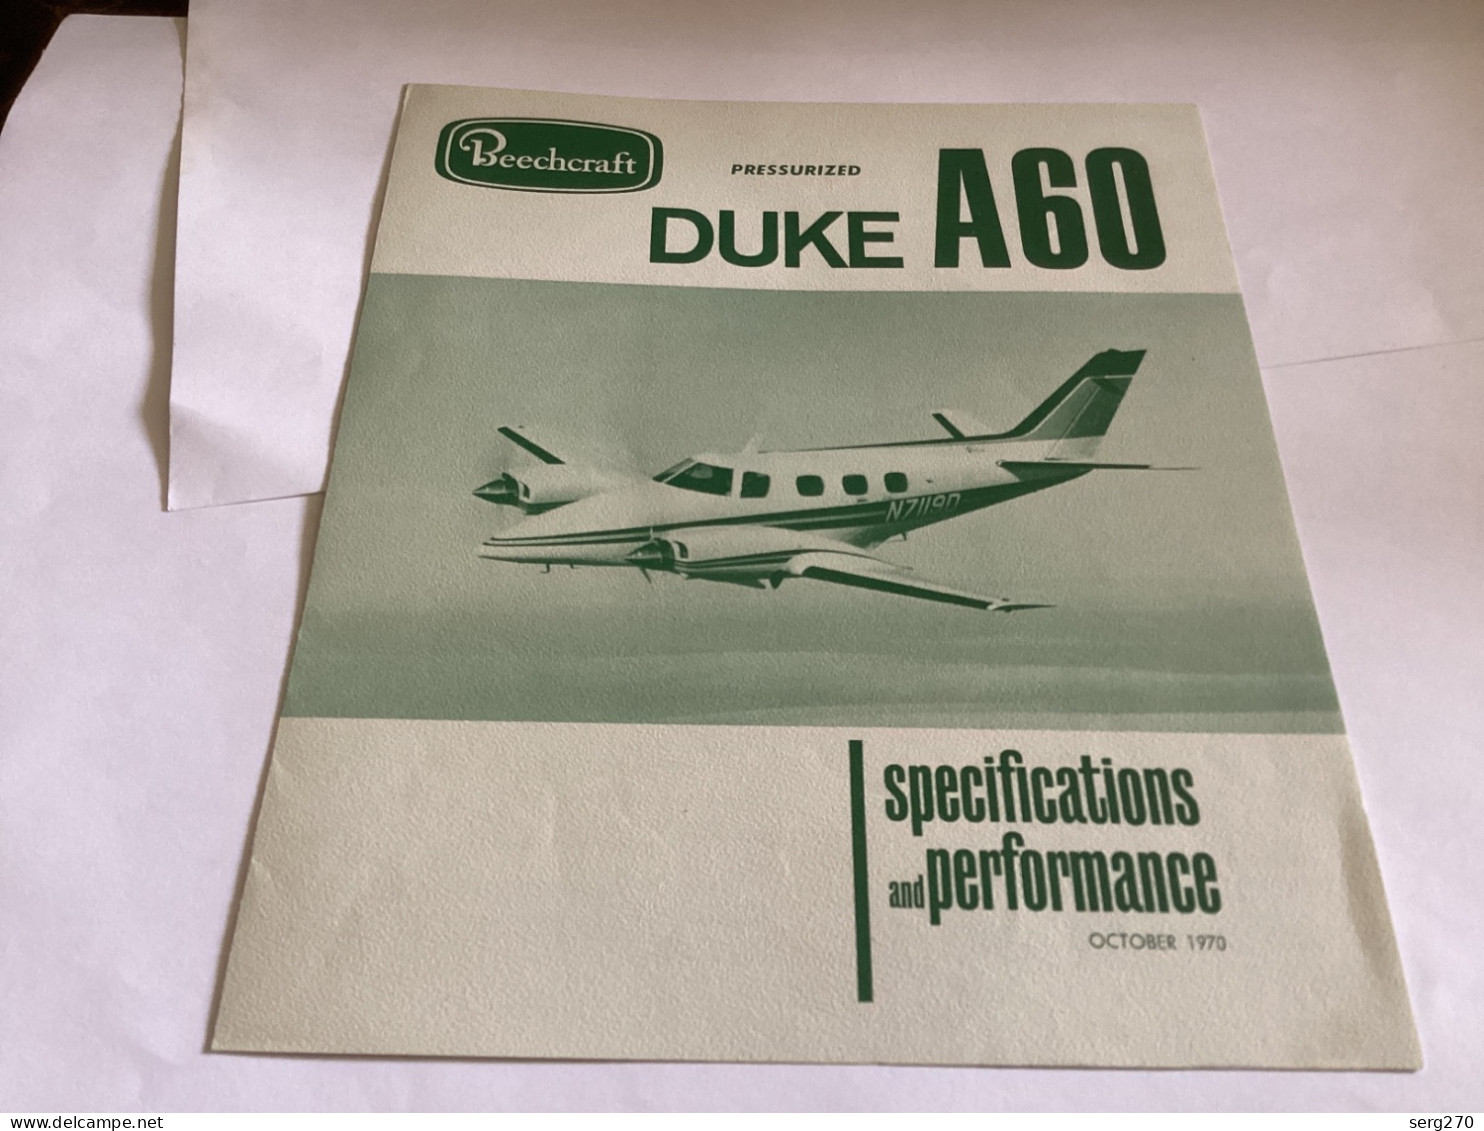 Avion Aviation Beecheraft PRESSURIZIO DUKE AGI 1970 Specifications And Performance OCTOBER 1970 - Transportation